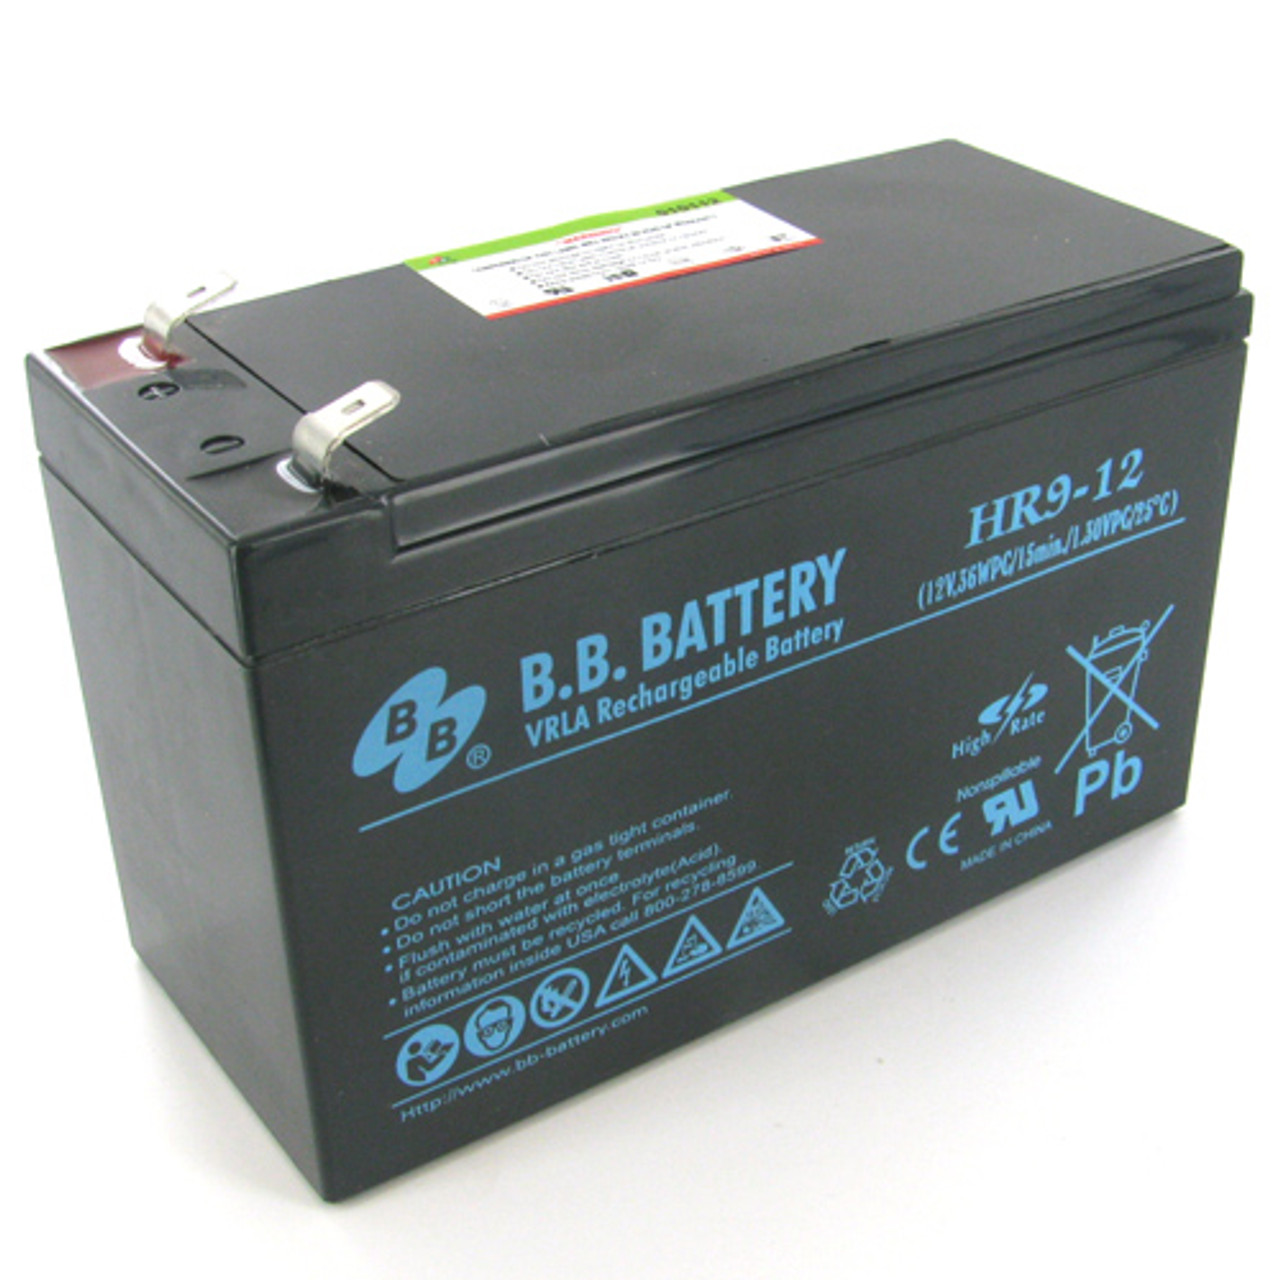 B b battery 12 12